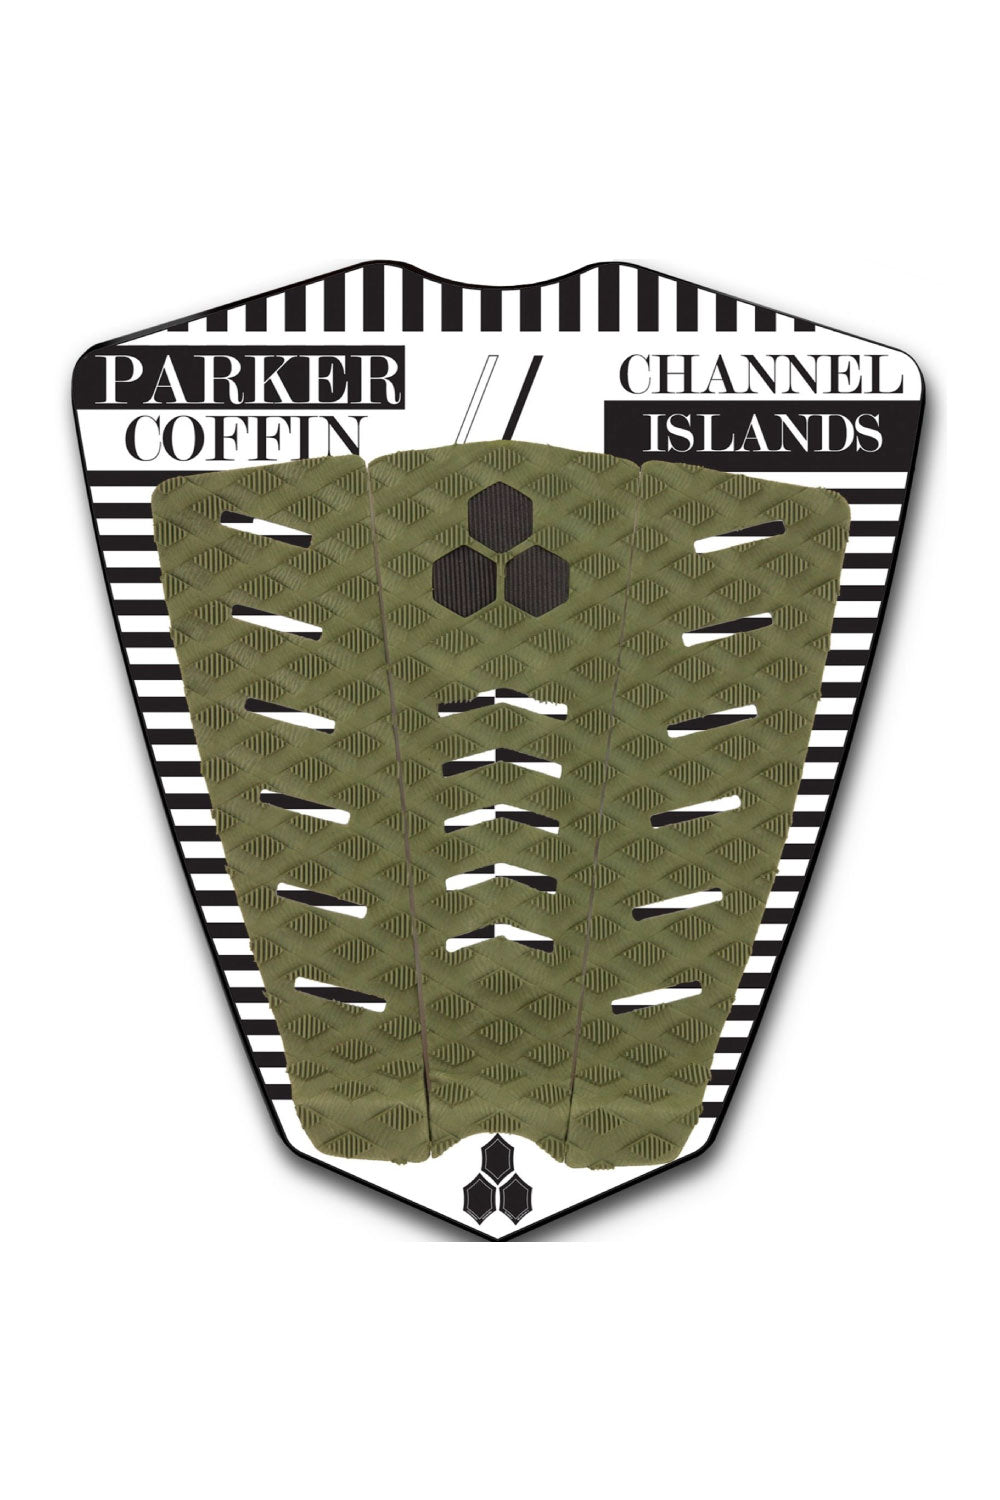 Channel Islands Parker Coffin Grip Pad